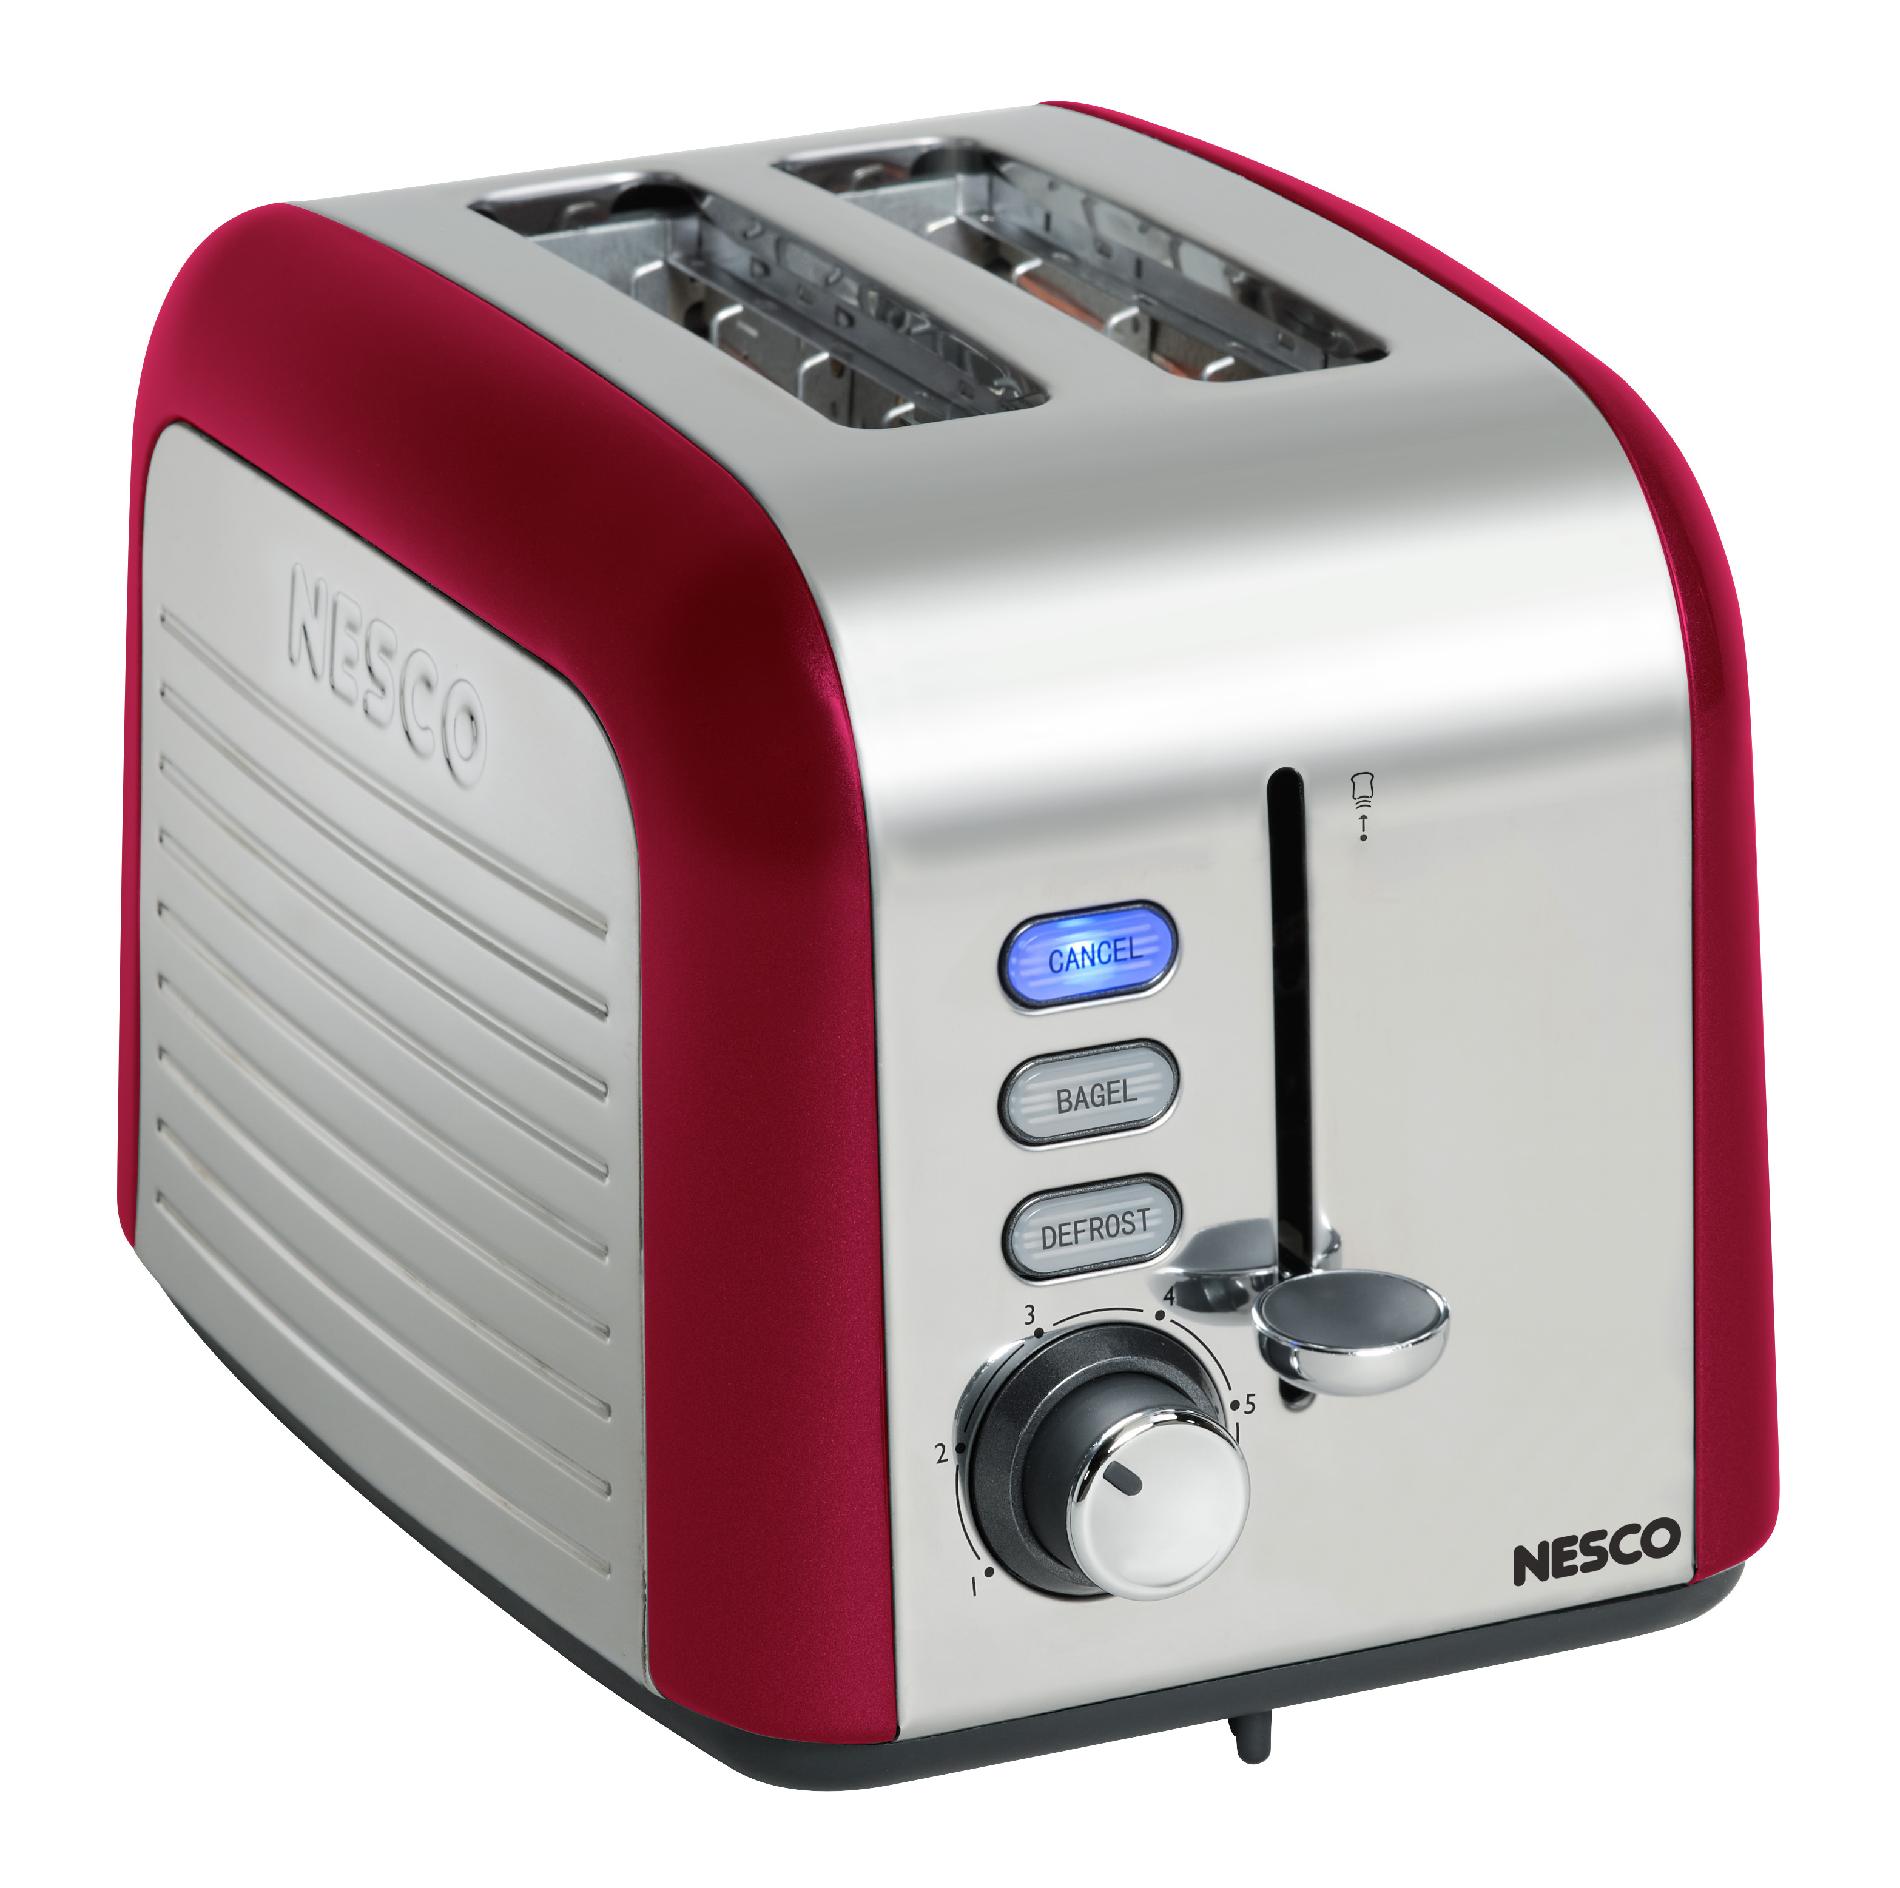 Nesco T1000-12 Red 2 Slice Toaster